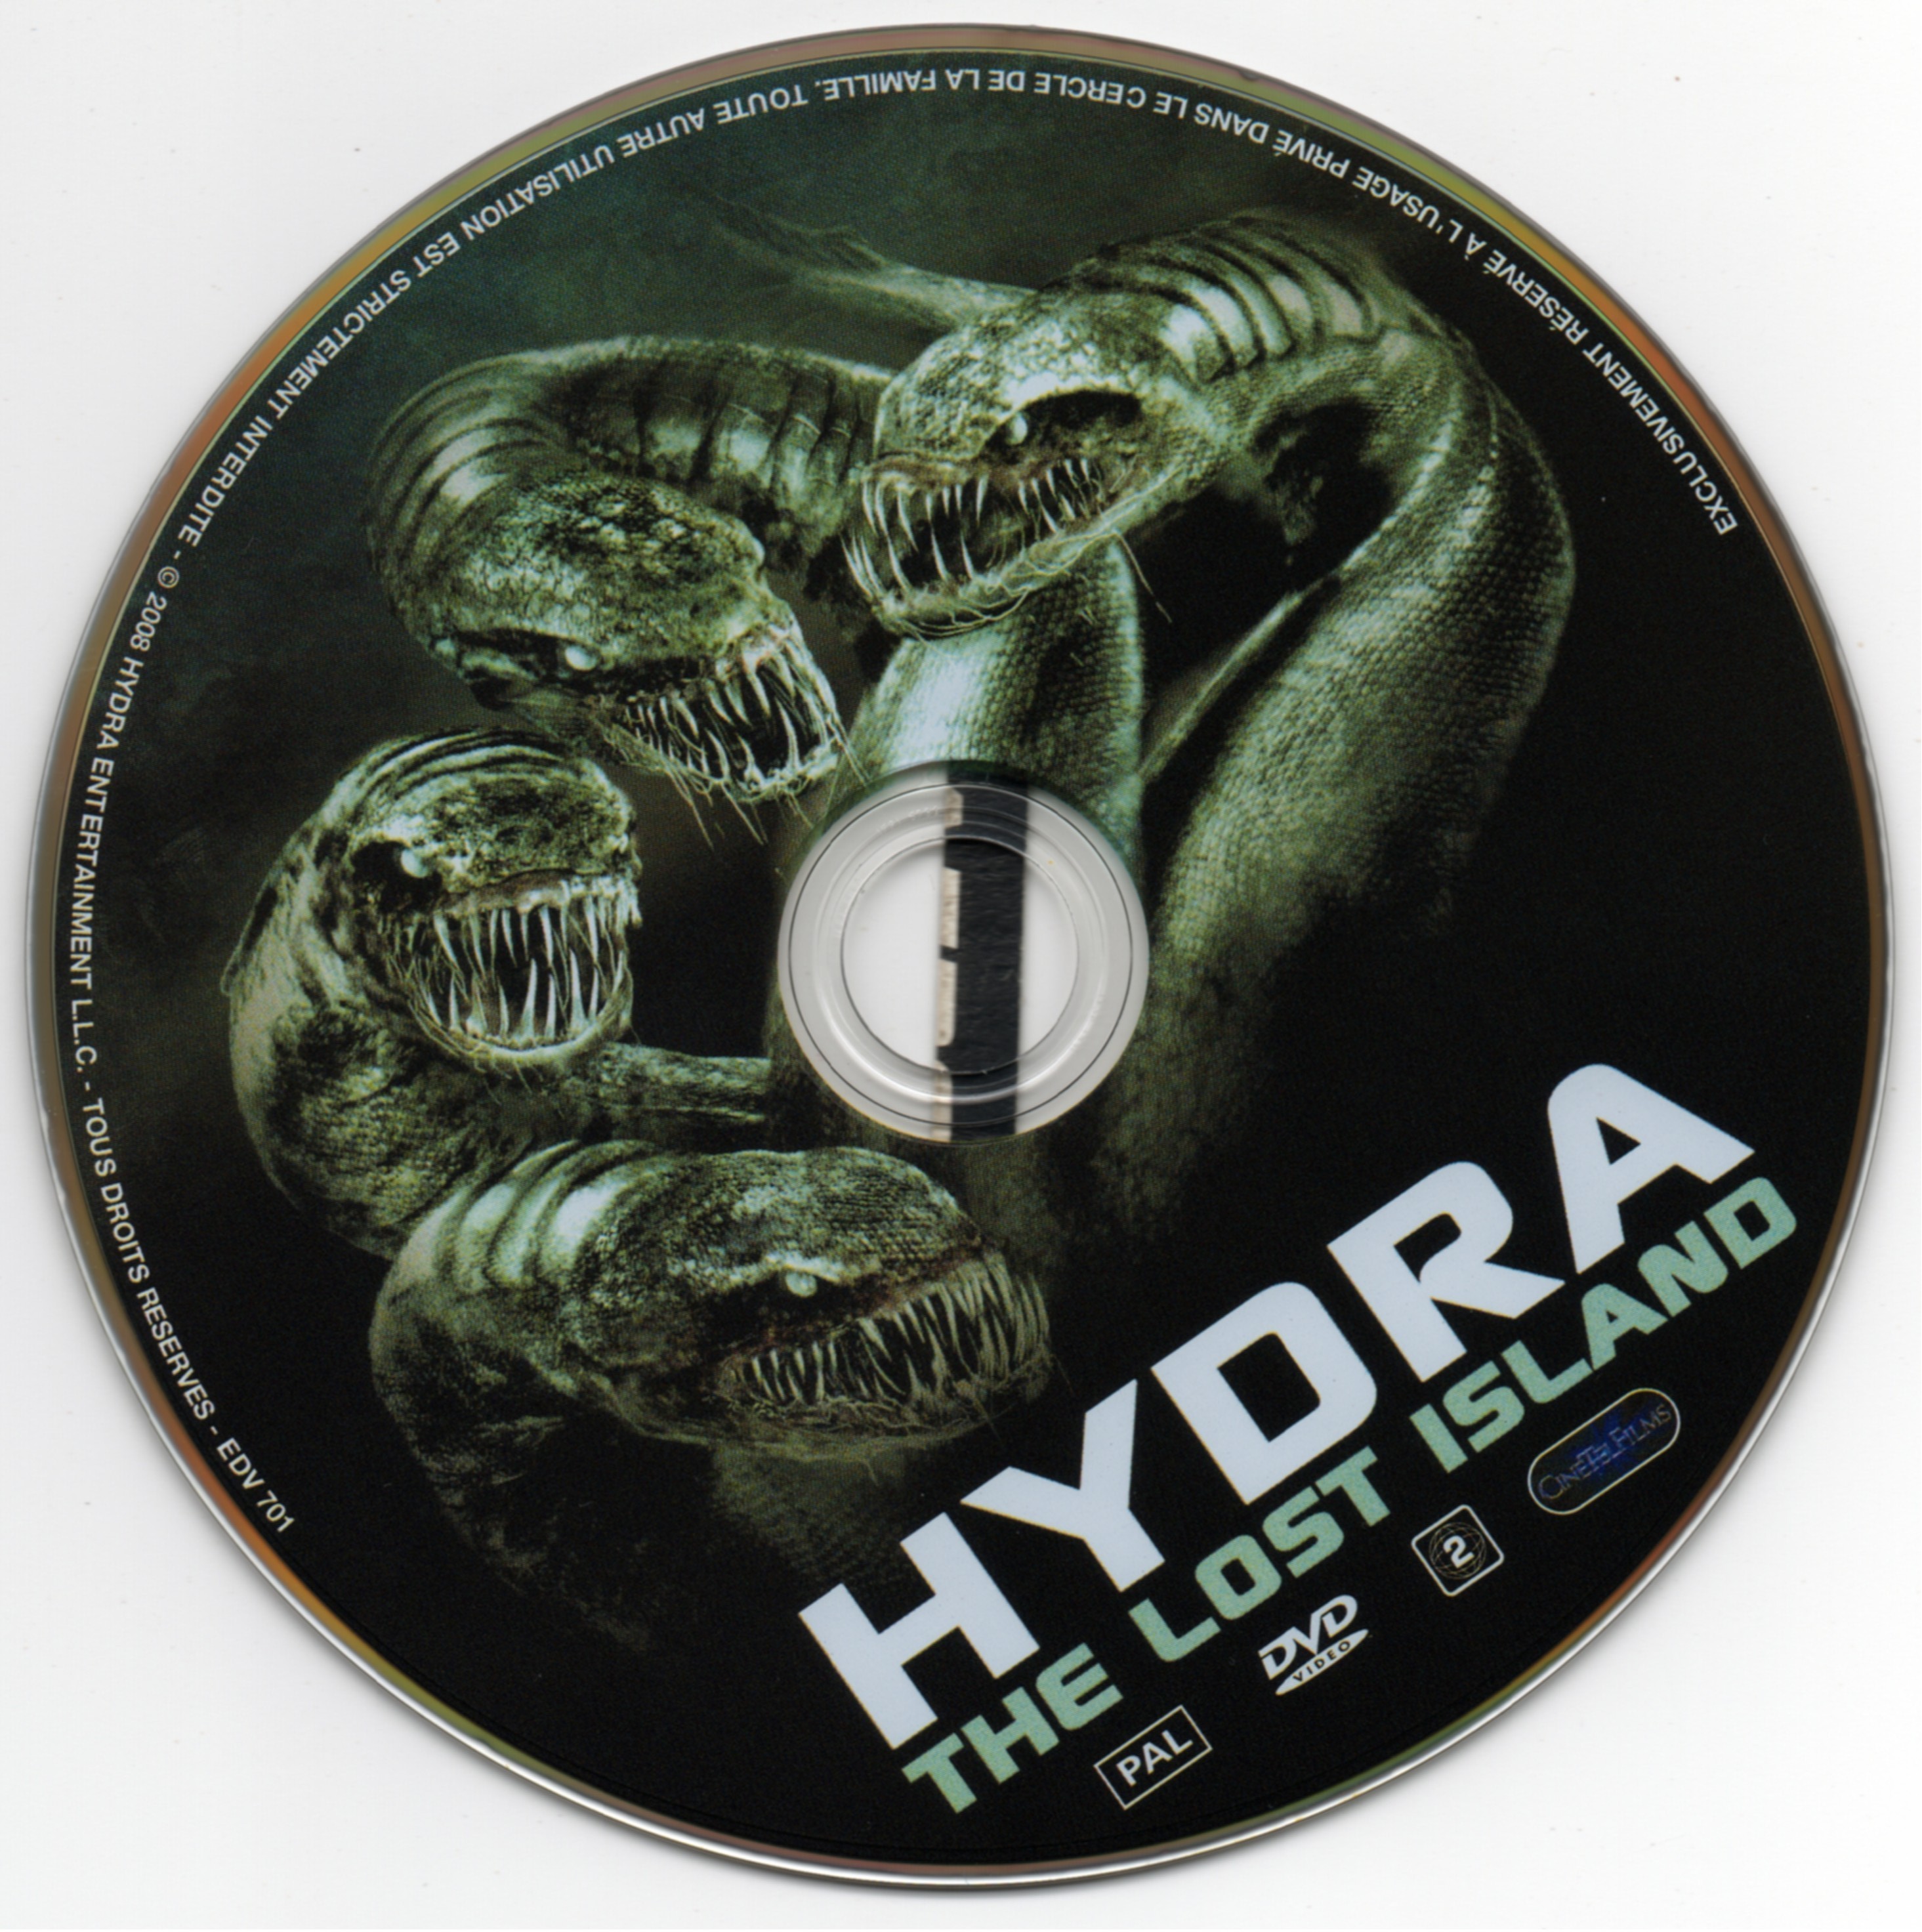 Hydra the lost island